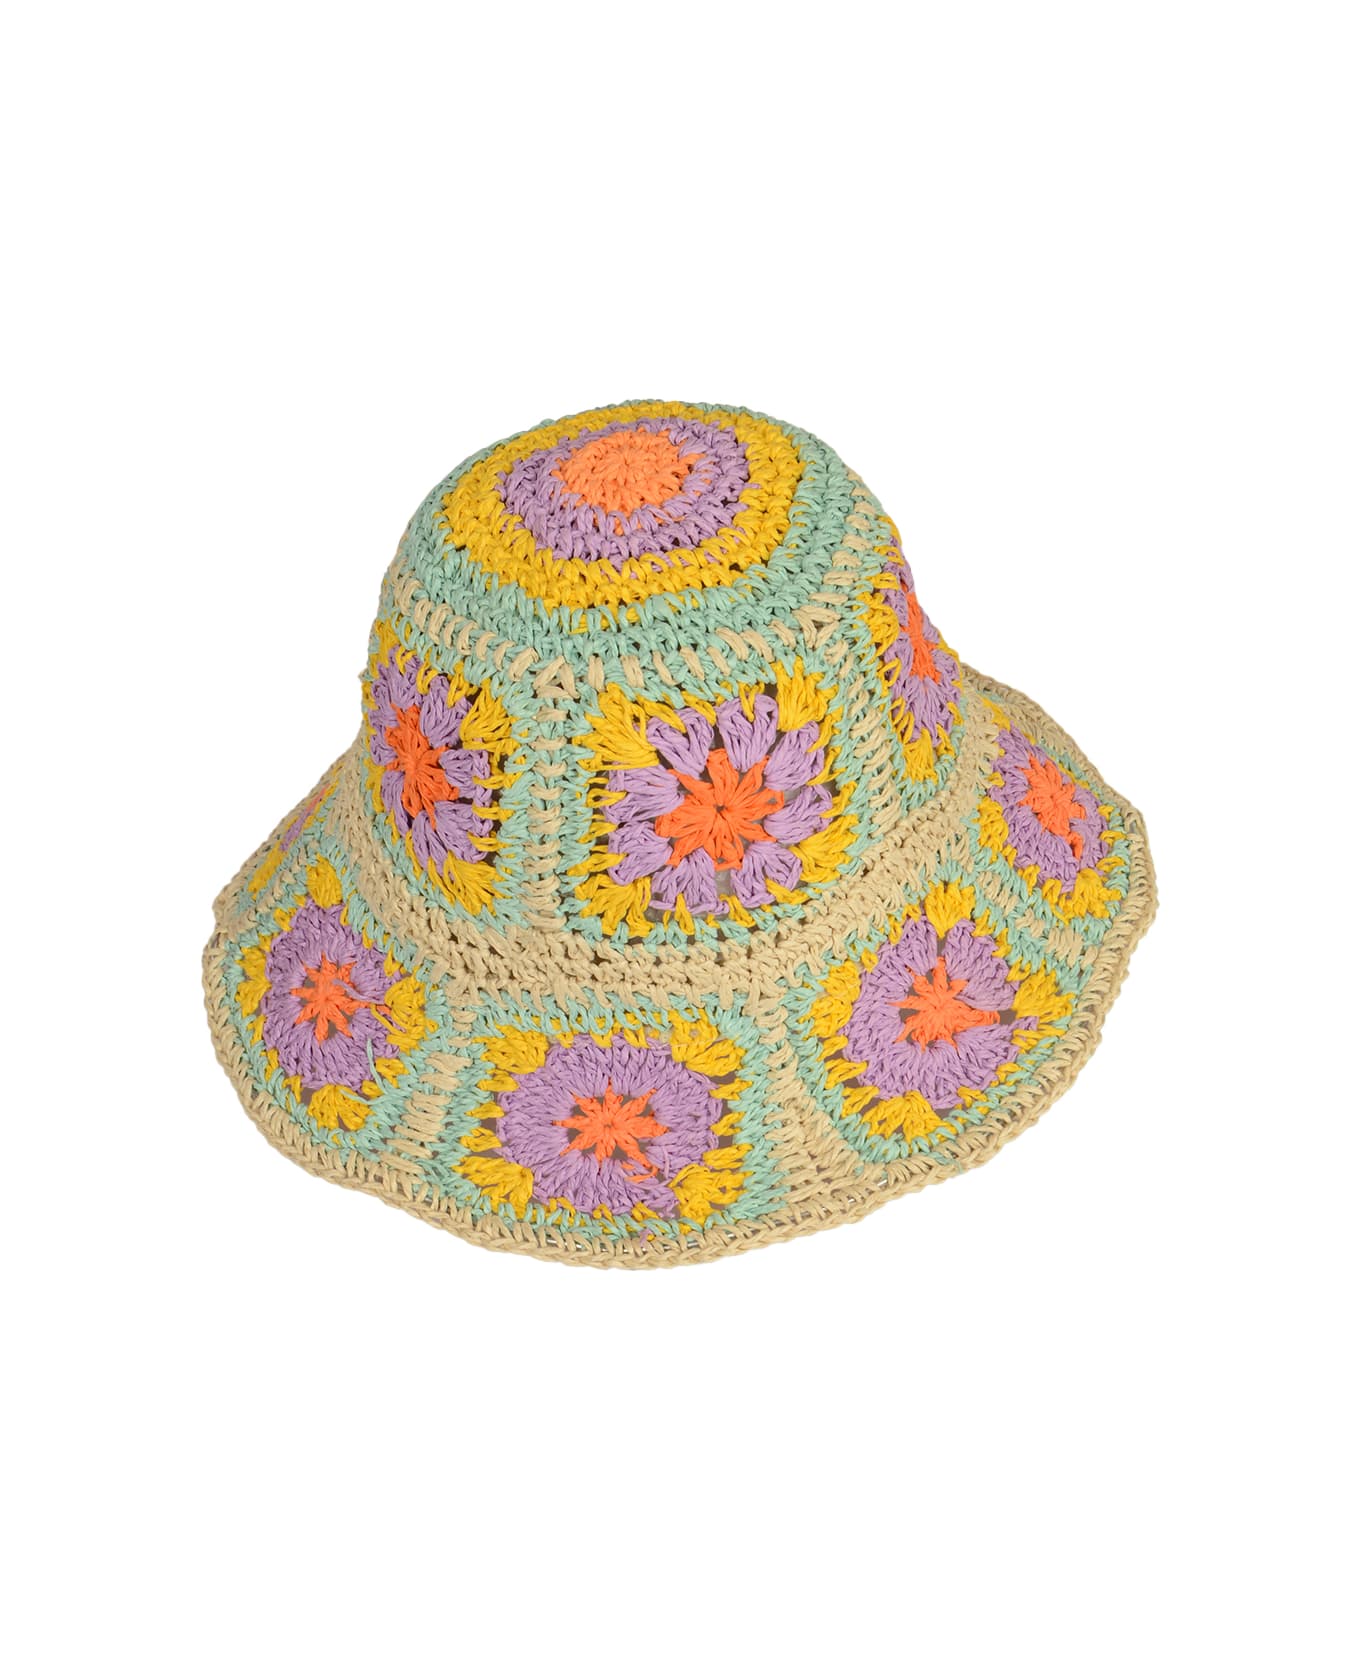 Weili Zheng Crochet Patterned Hat - Pastel